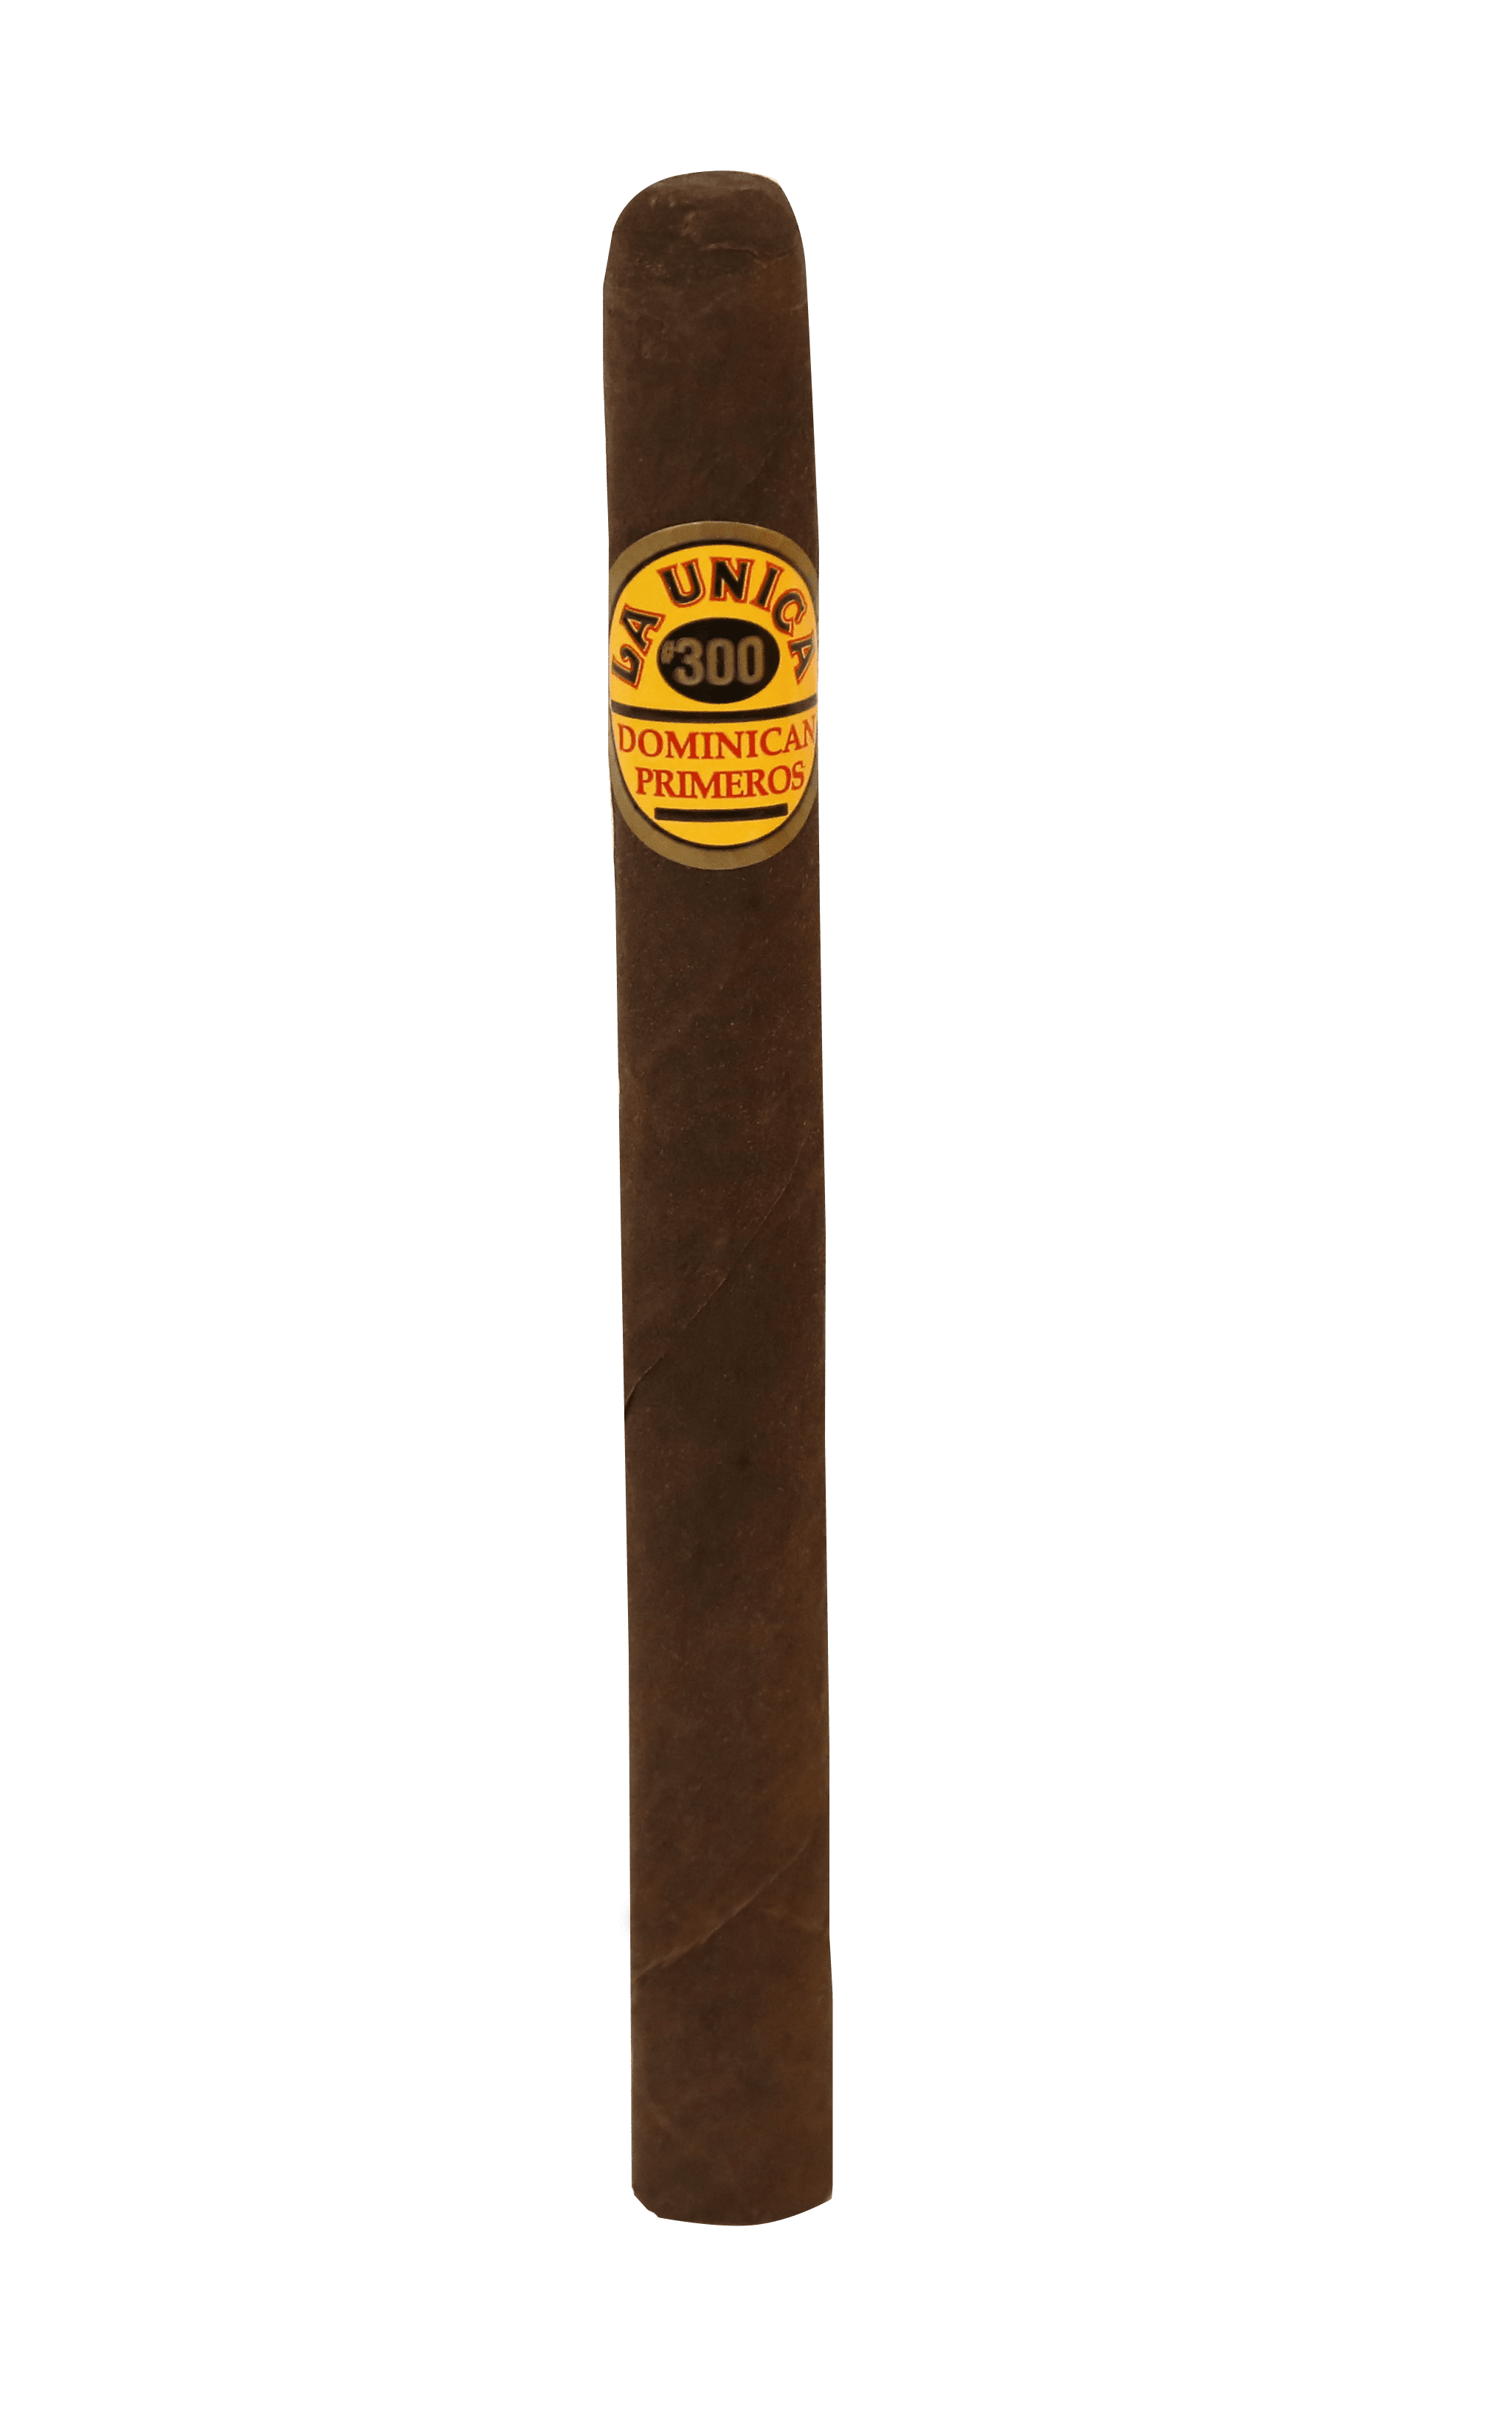 Single La Unica No. 300 Maduro cigar